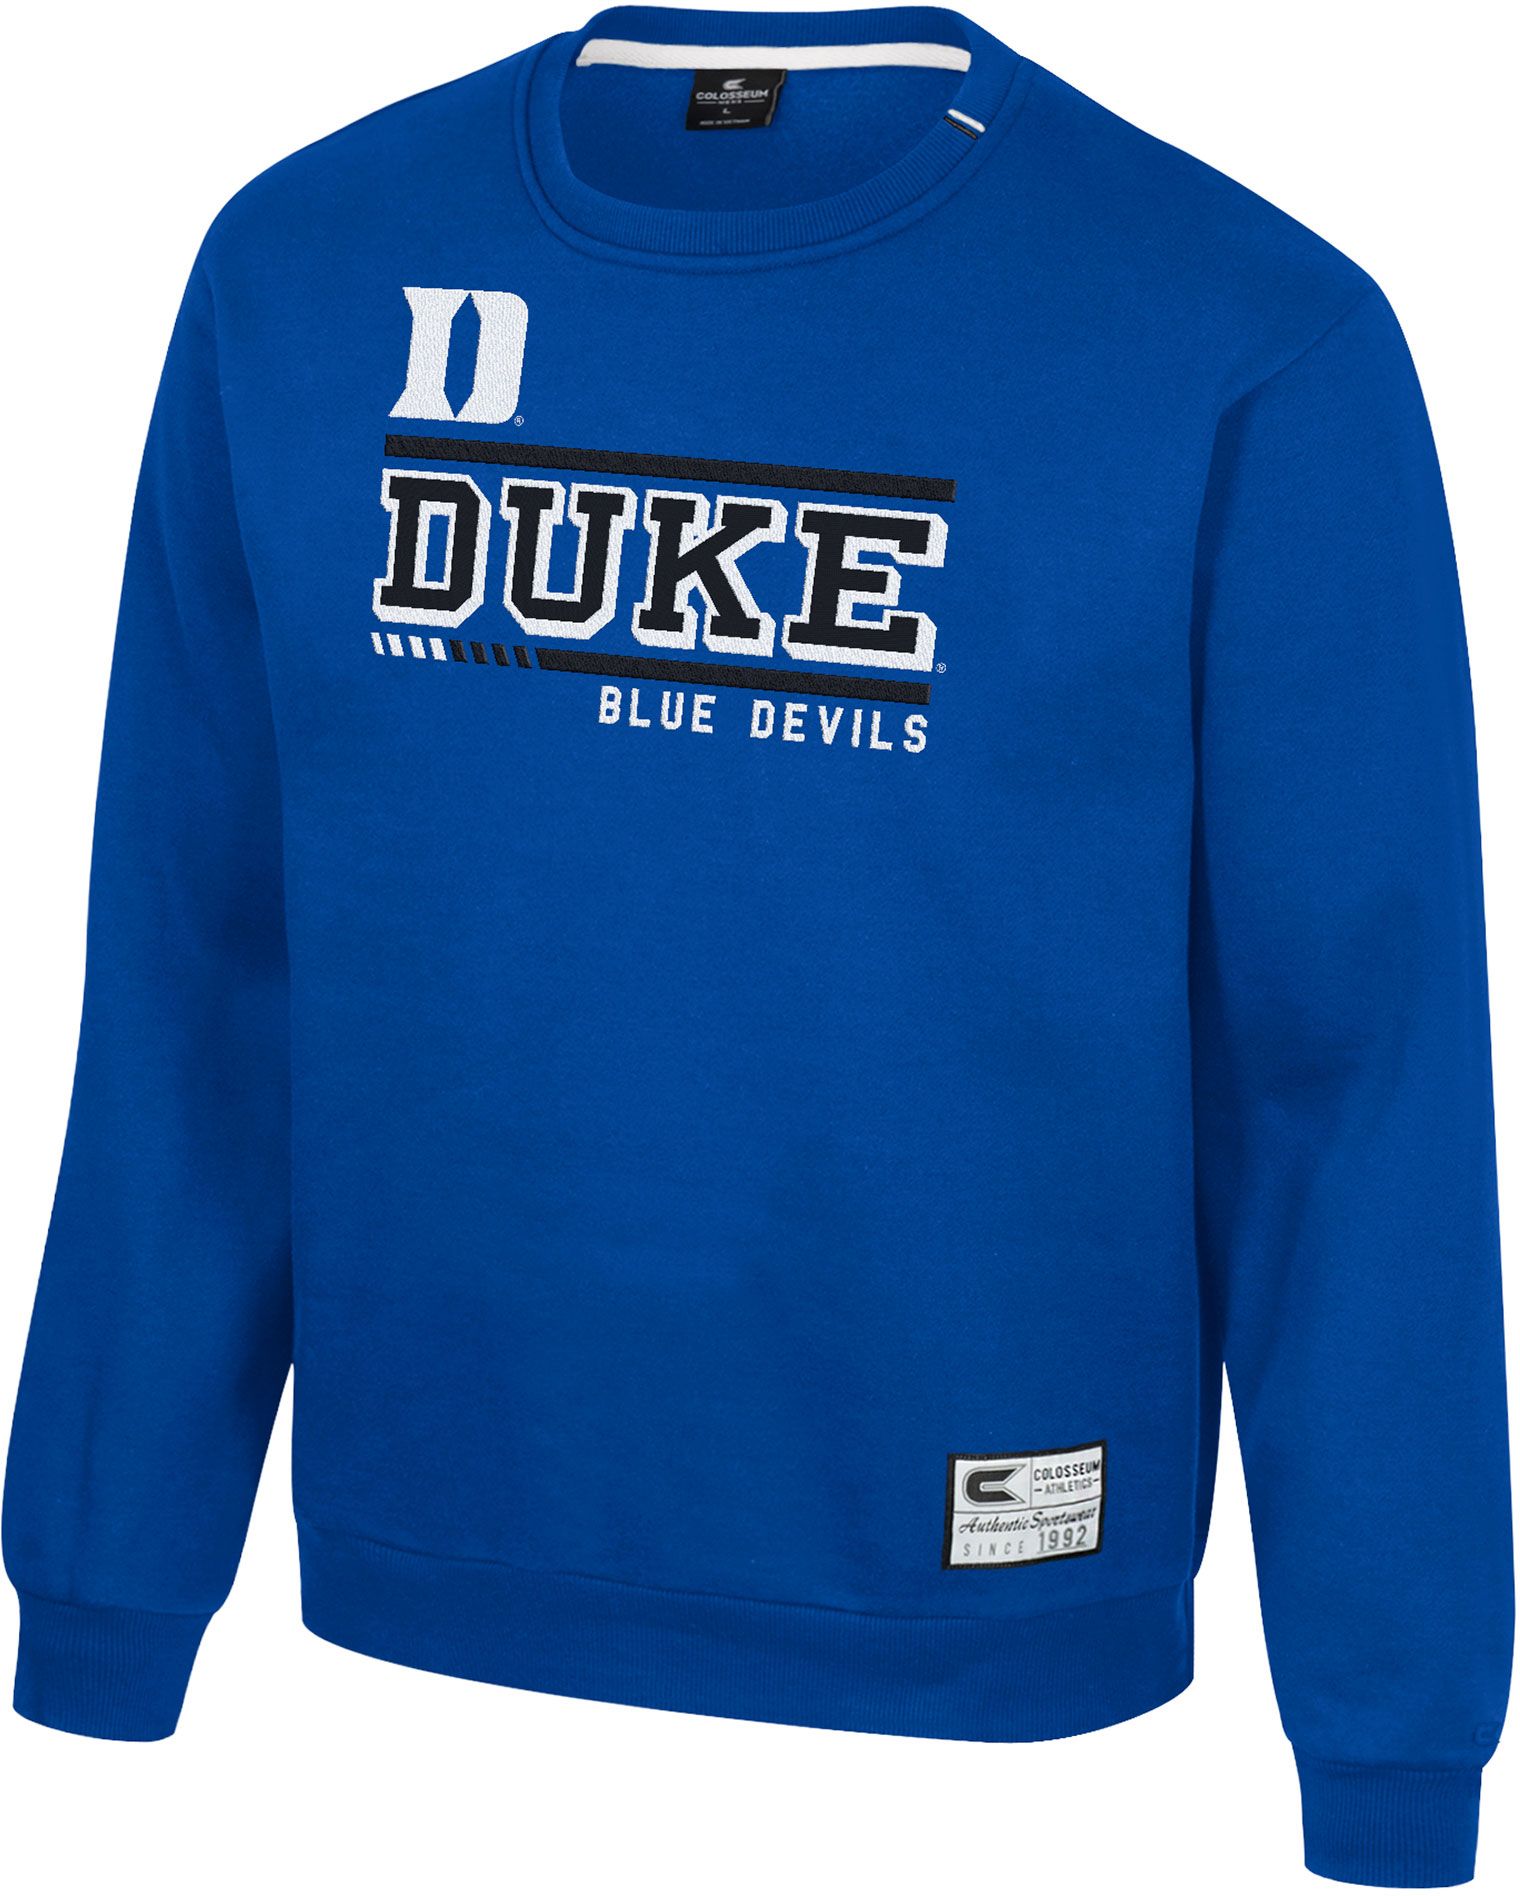 duke blue devils apparel near me